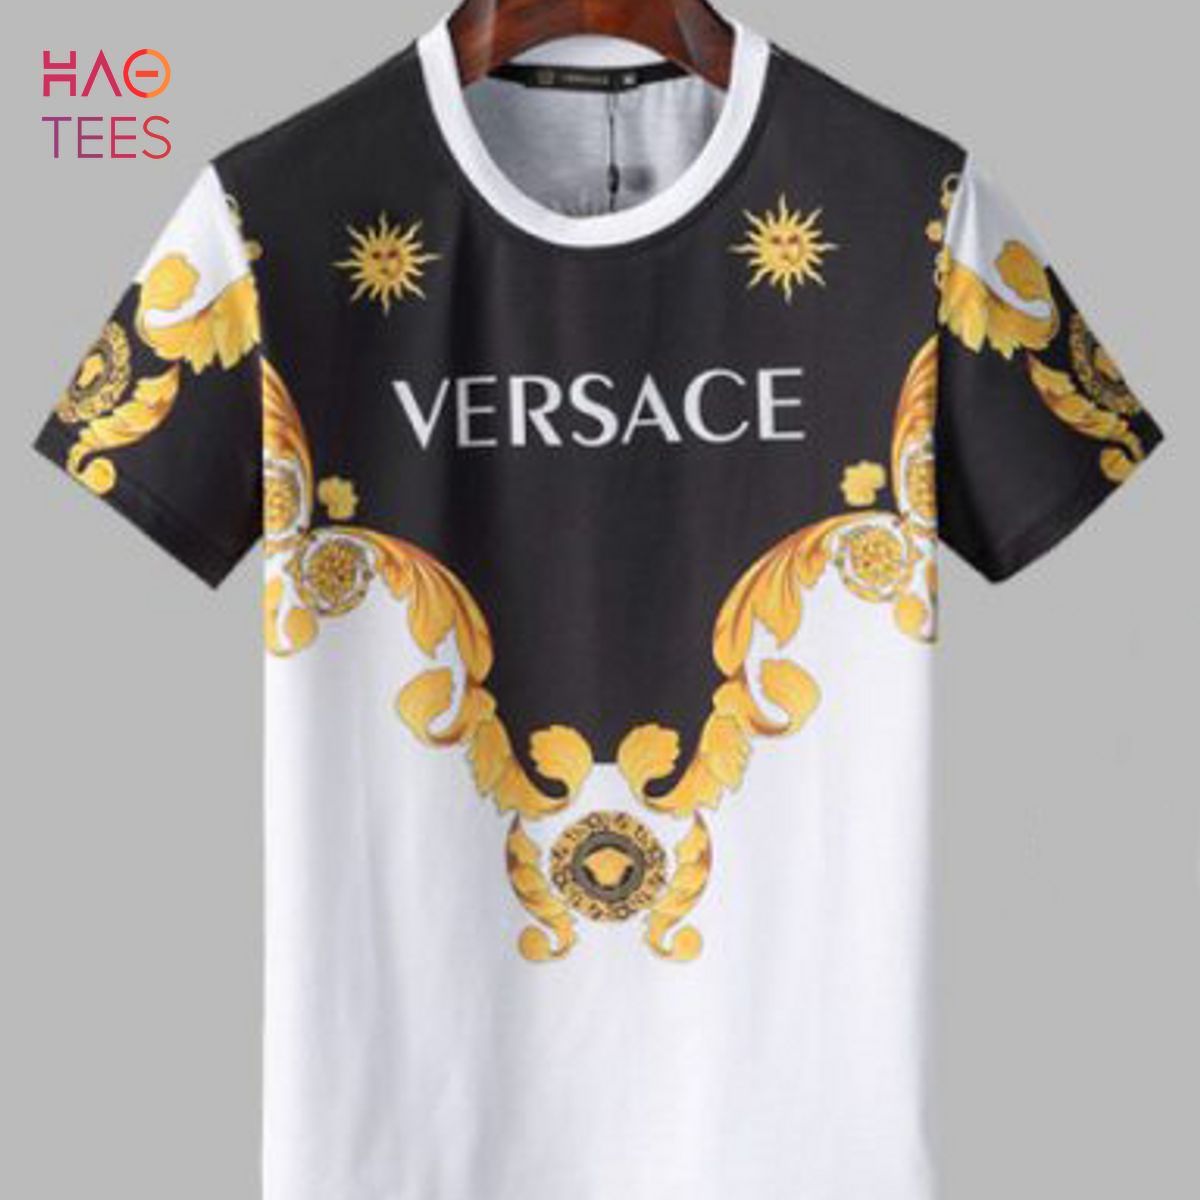 Versace Black Gold Color Hawaiian Shirt Limited Edition